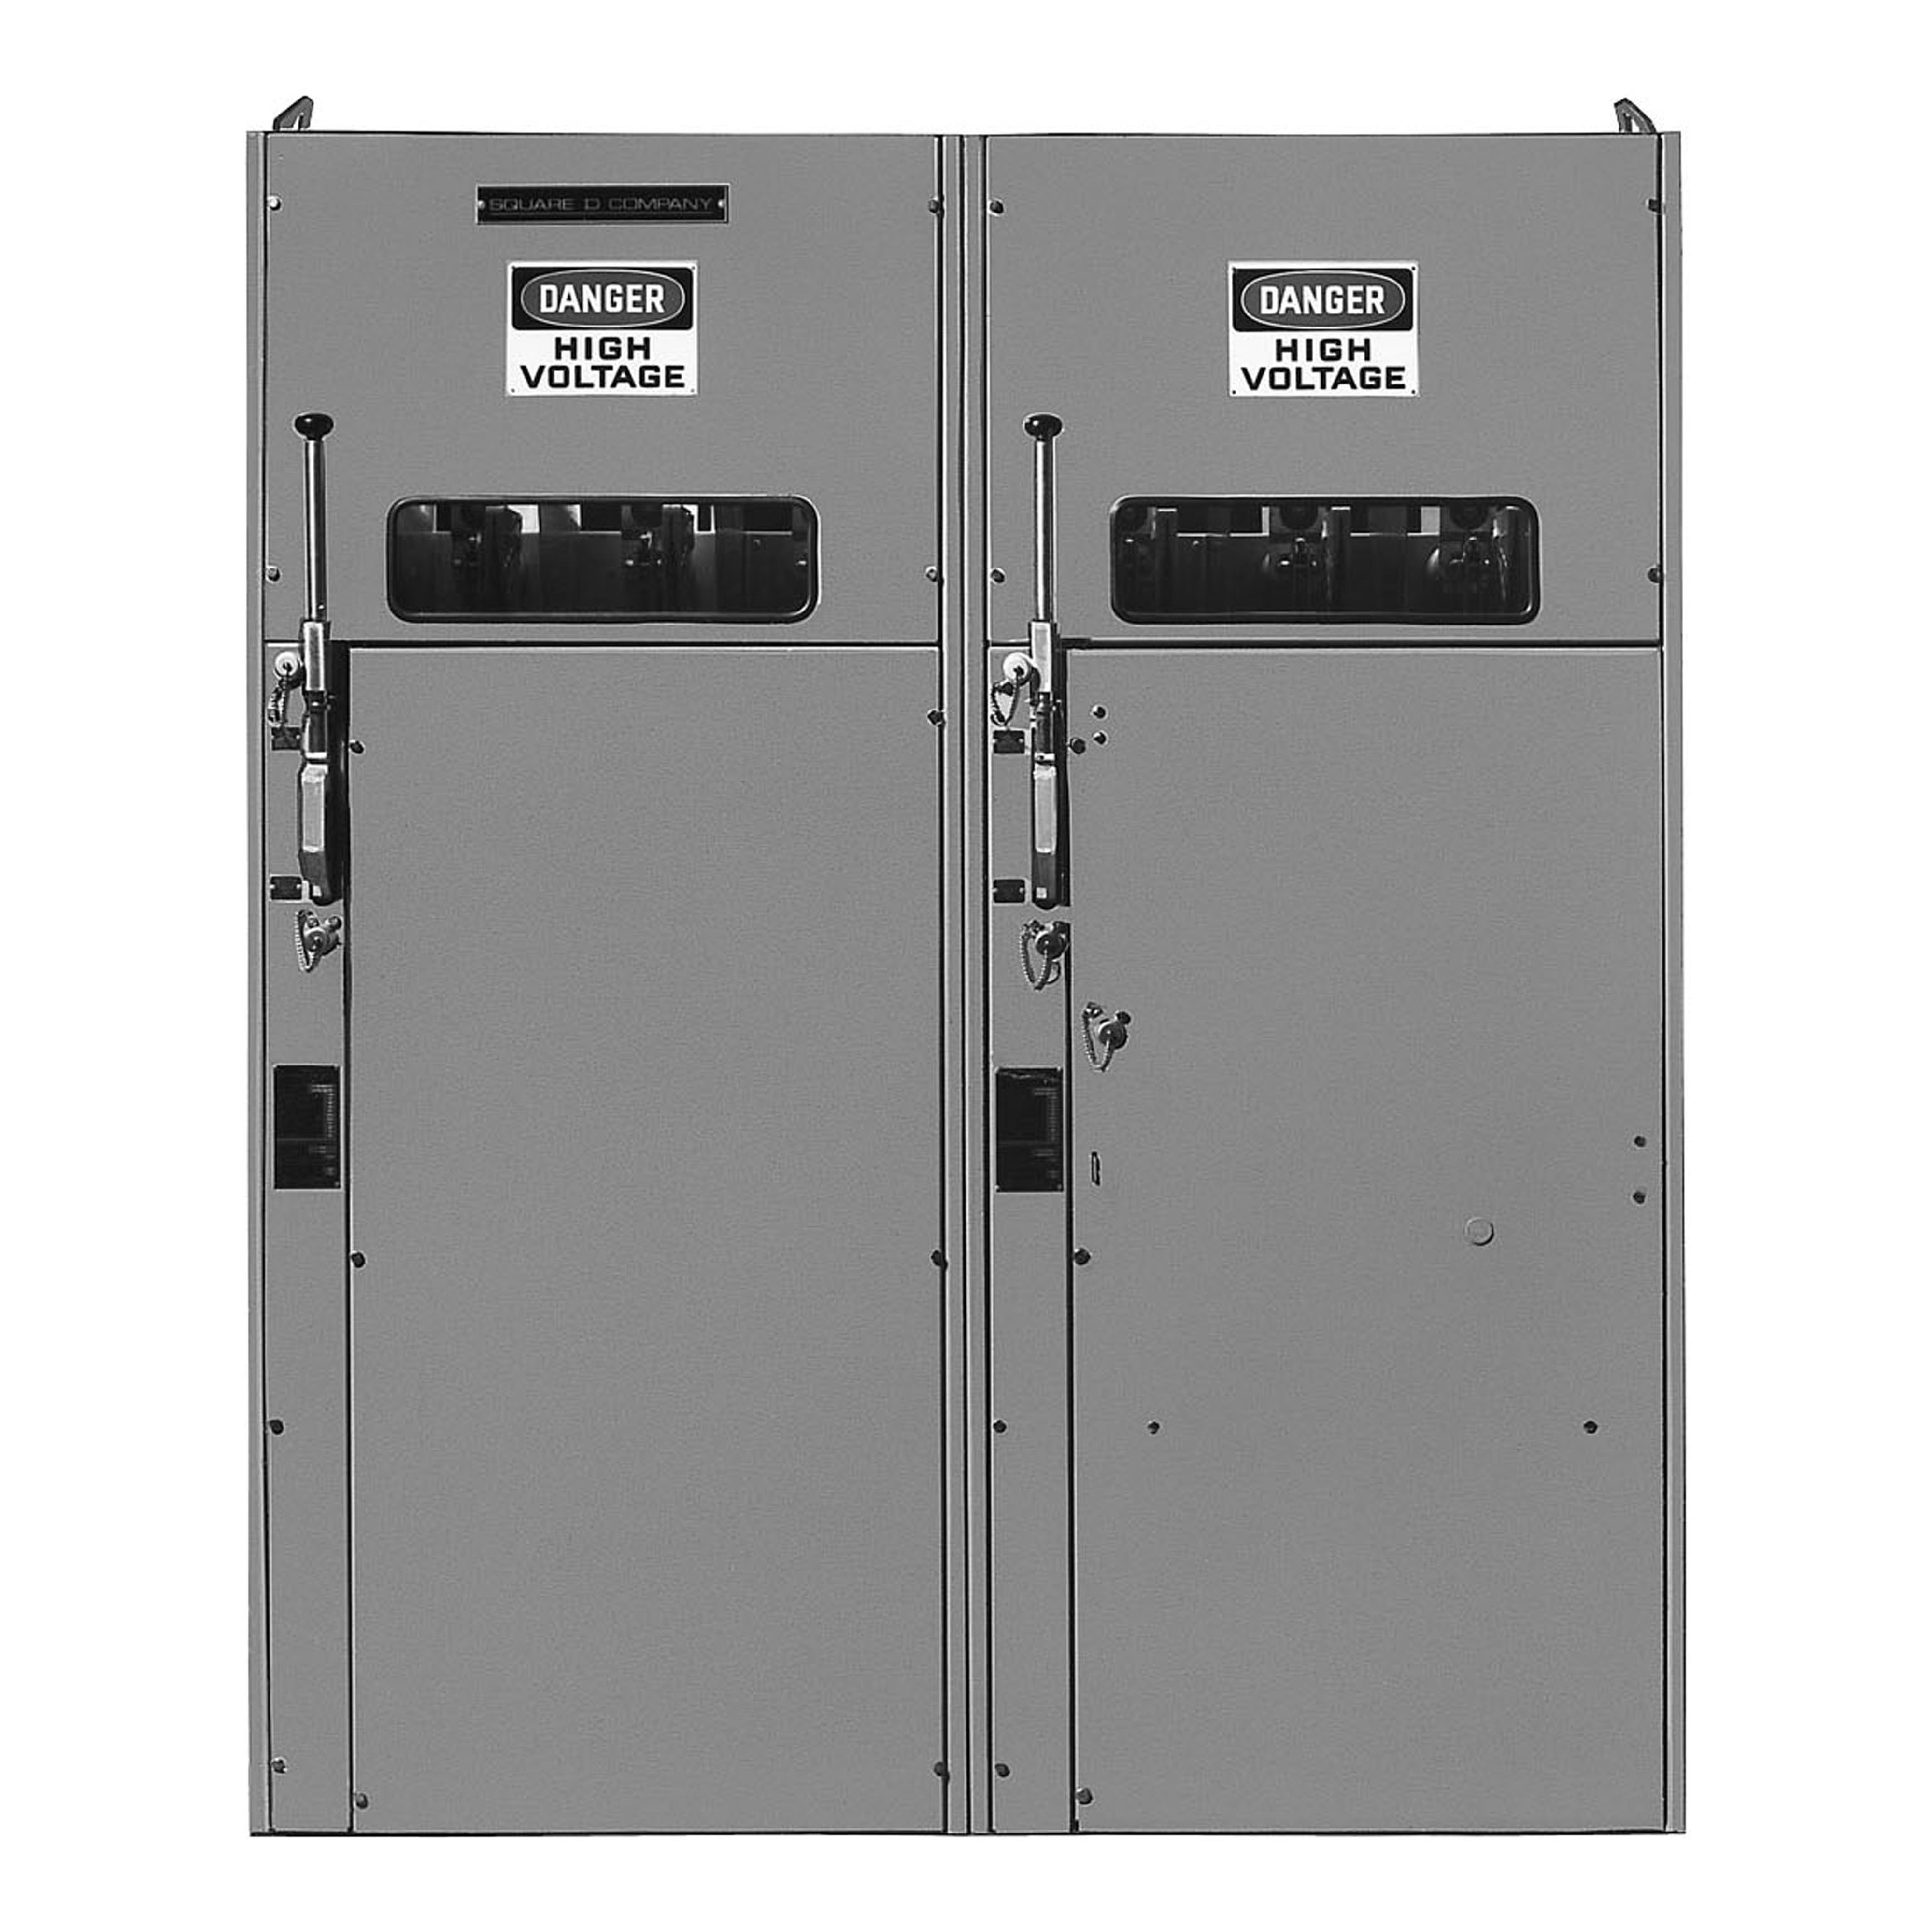 Switchgear, HVL, duplex, 600A, 4.76kV, 10E to 400E boric acid fuse, transformer disconnect, left, NEMA 1